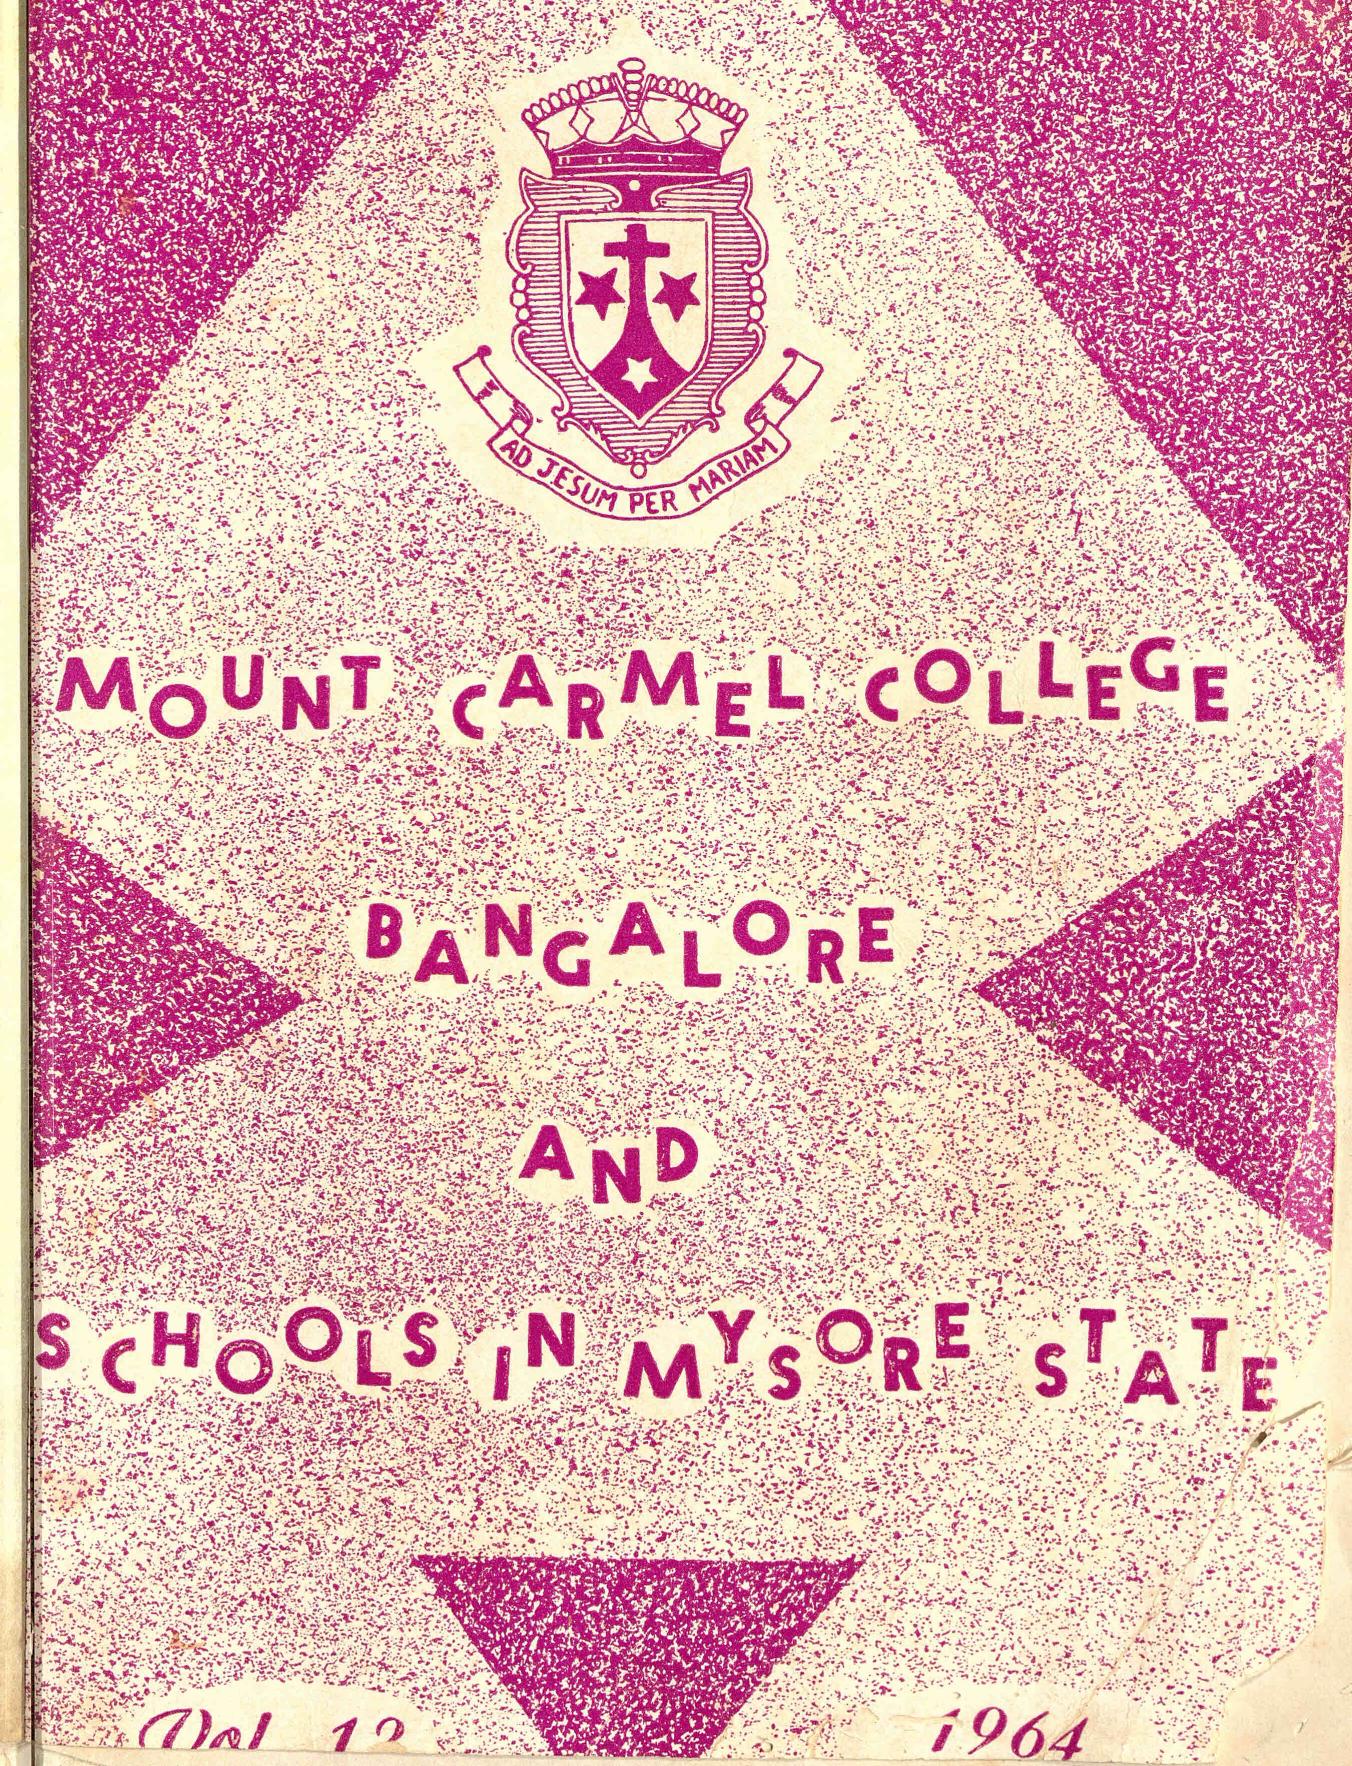  1964 - Mount Carmel College Bangalore Annual